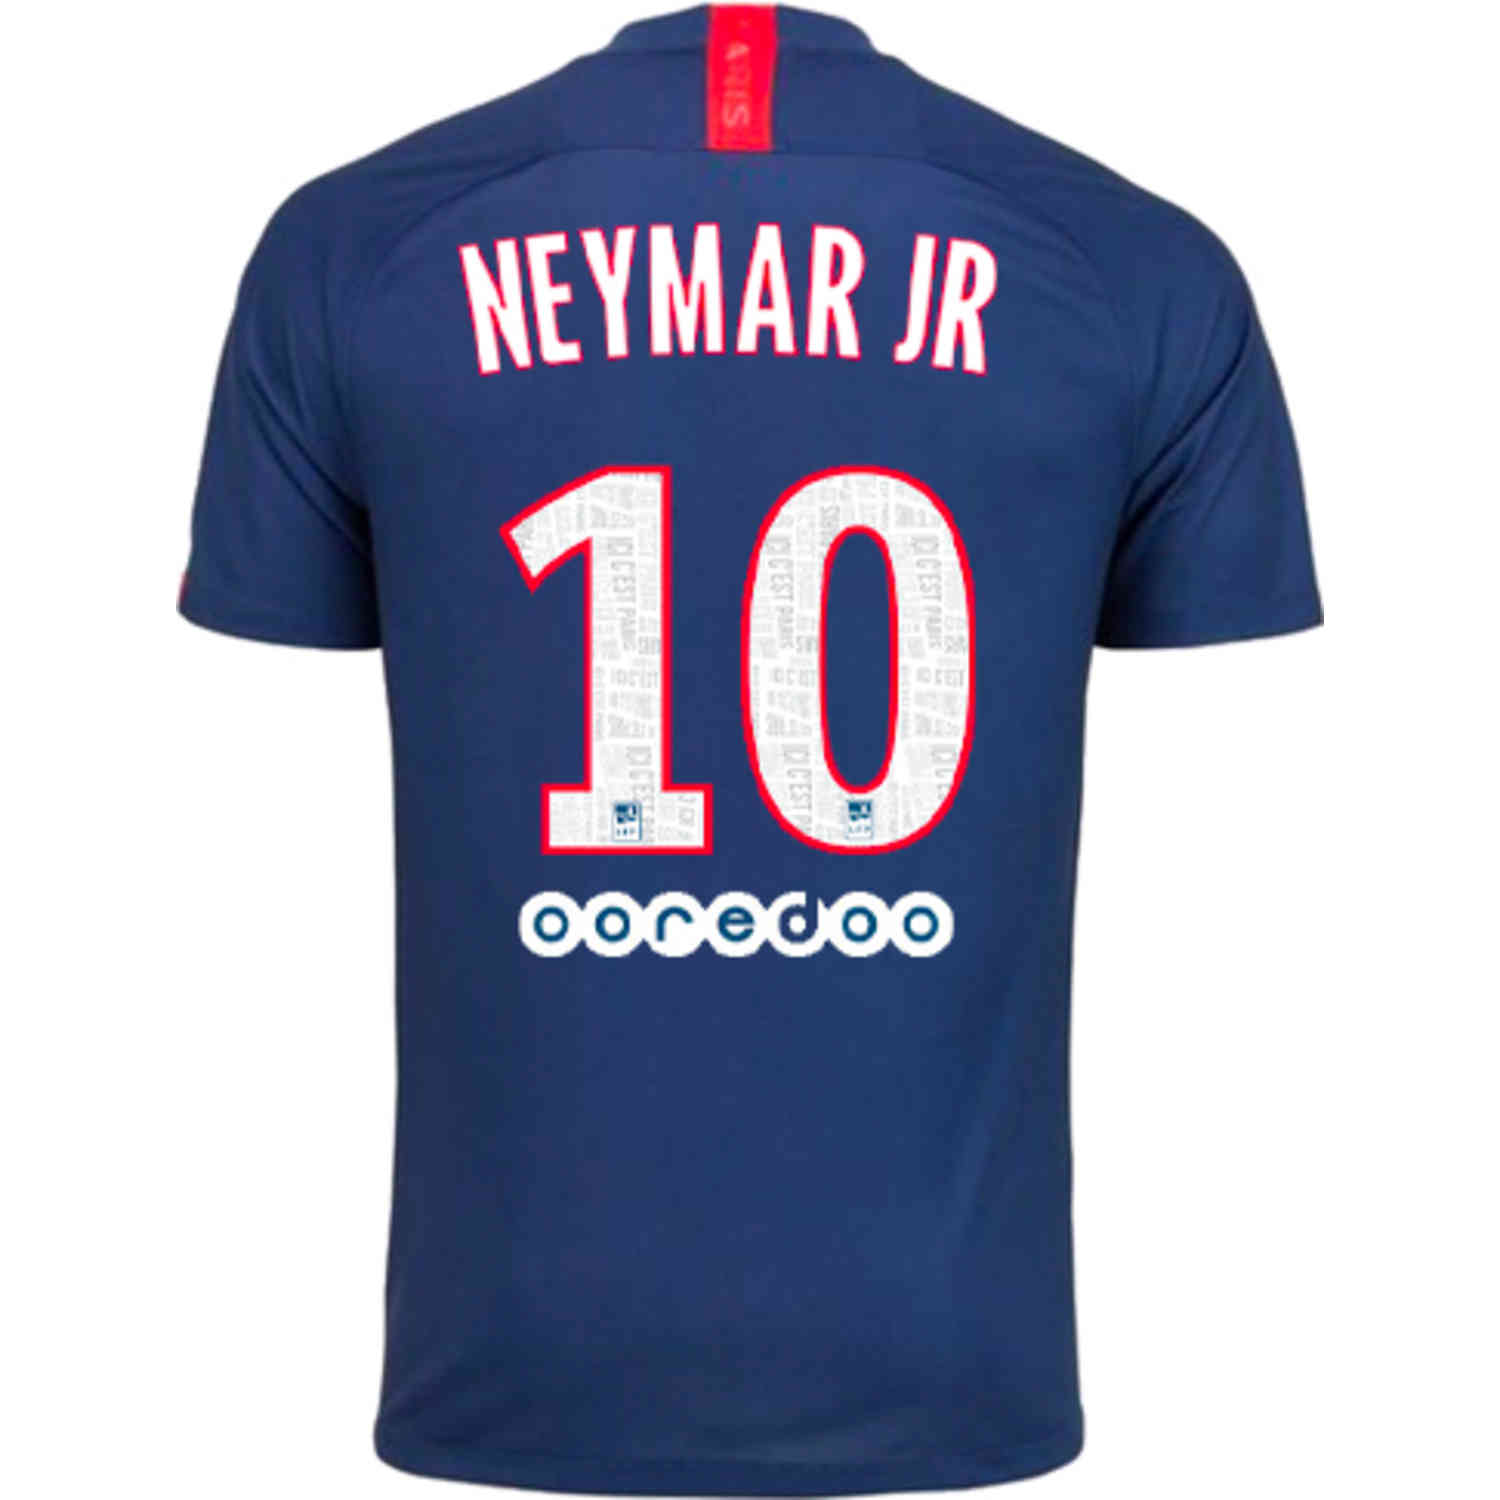 neymar jr psg jersey